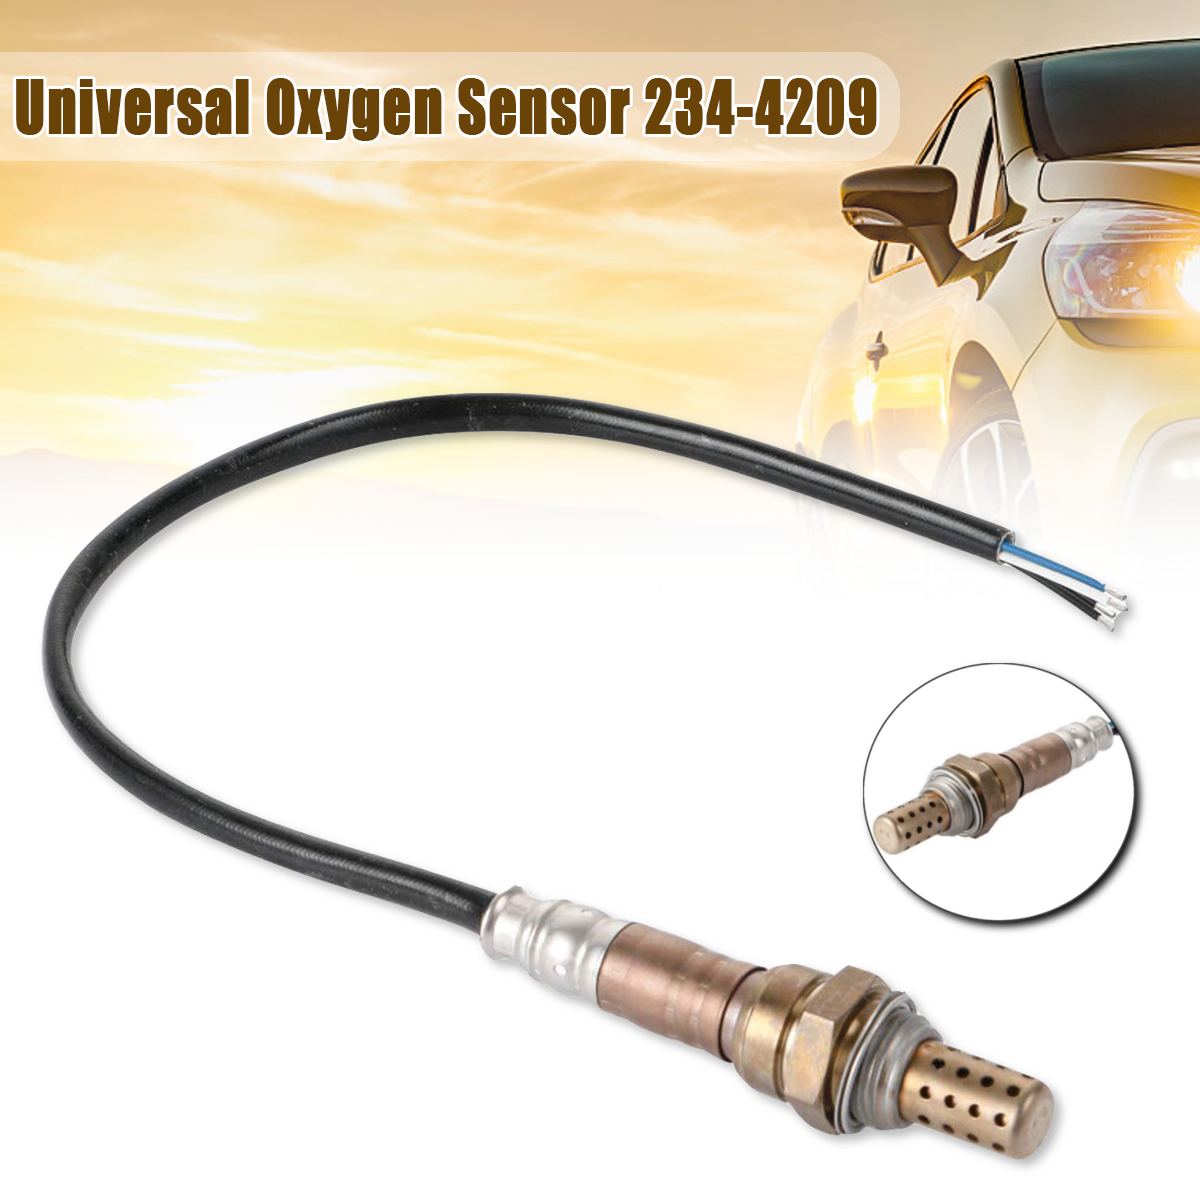 Oxygen-Sensor-Replacement-4-Wire-Universal-234-4209-For-Toyota-Camry-RAV4-Lexus-1536716-9